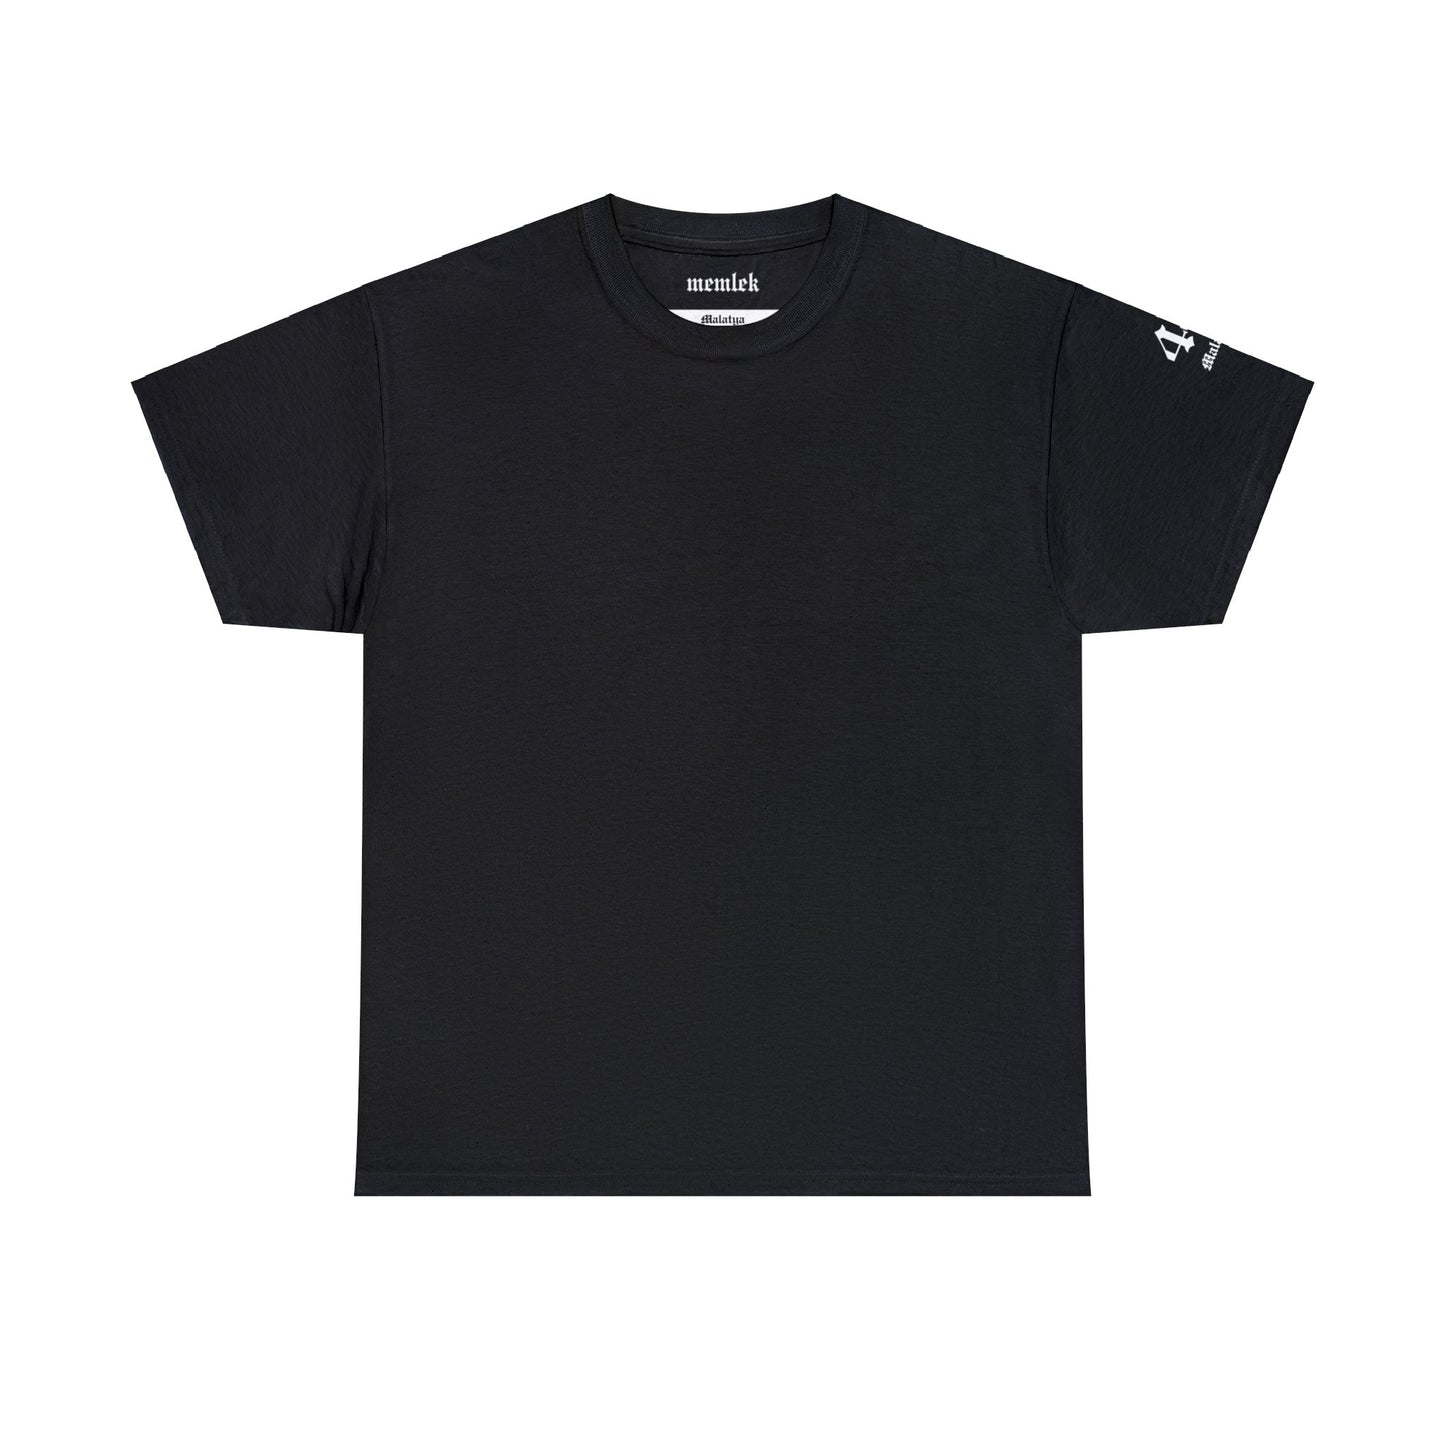 İlçem - 44 Malatya - T-Shirt - Back Print - Black